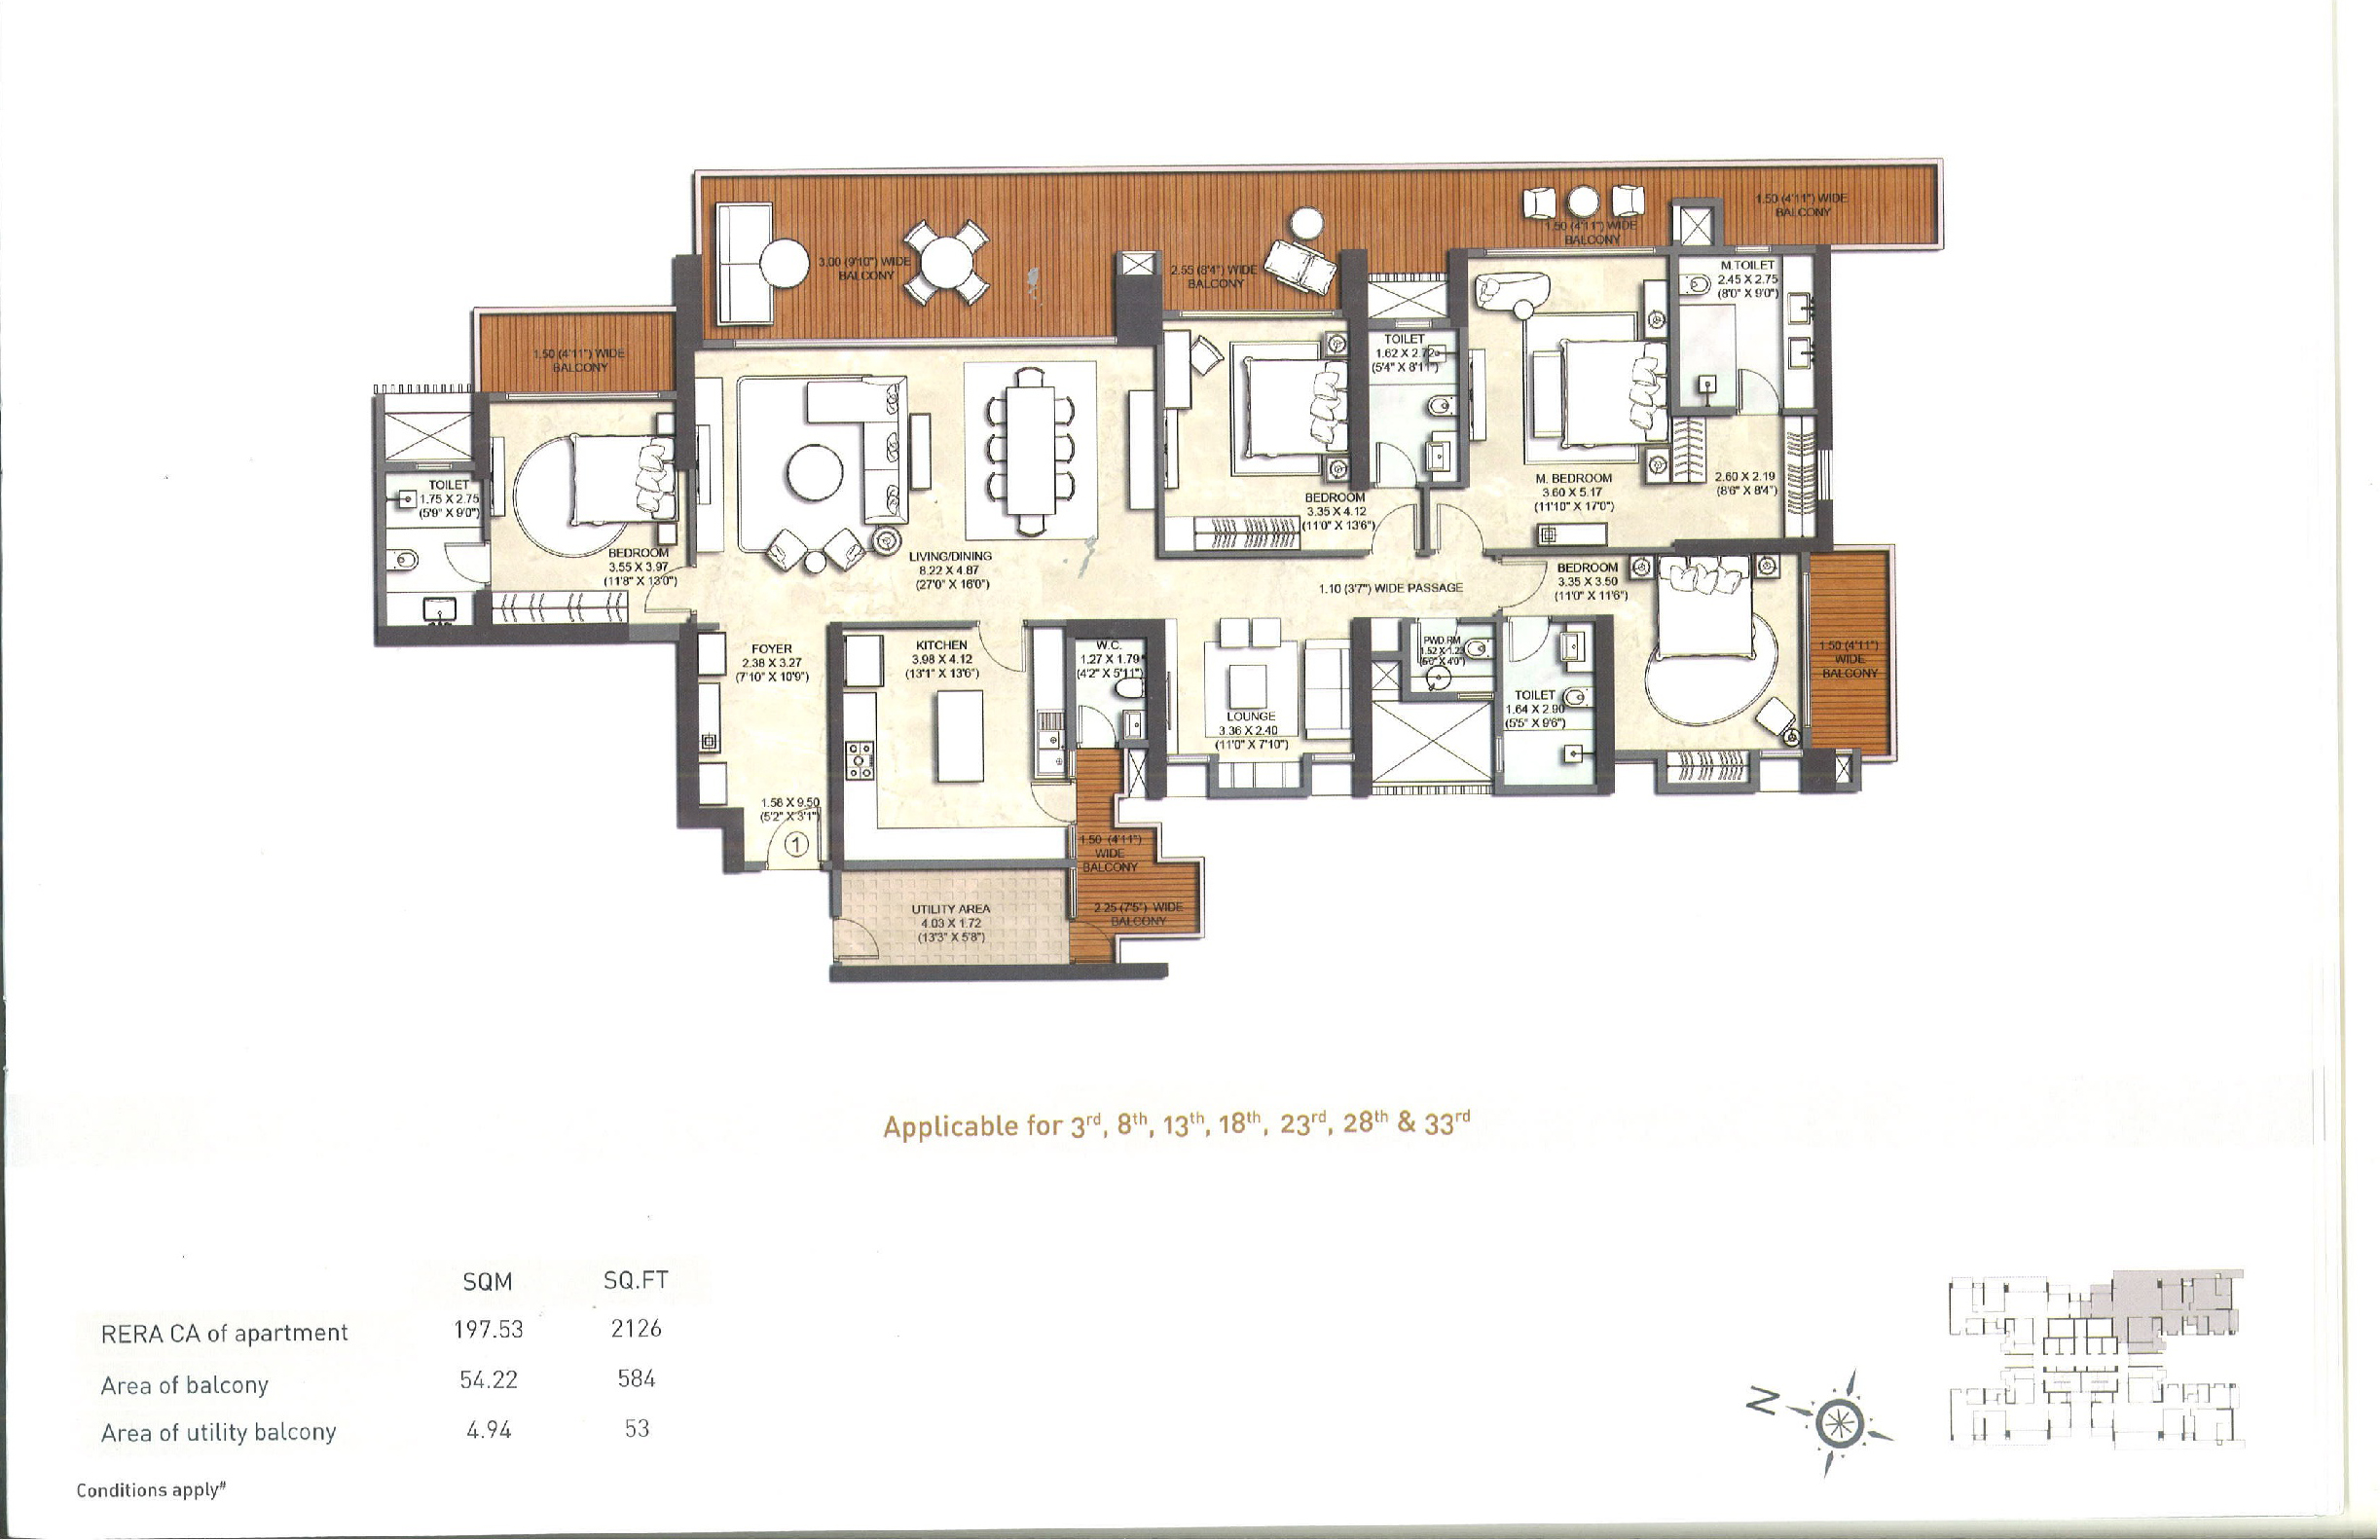 Kalpataru Vista 2126 Sq. Ft. floor plan